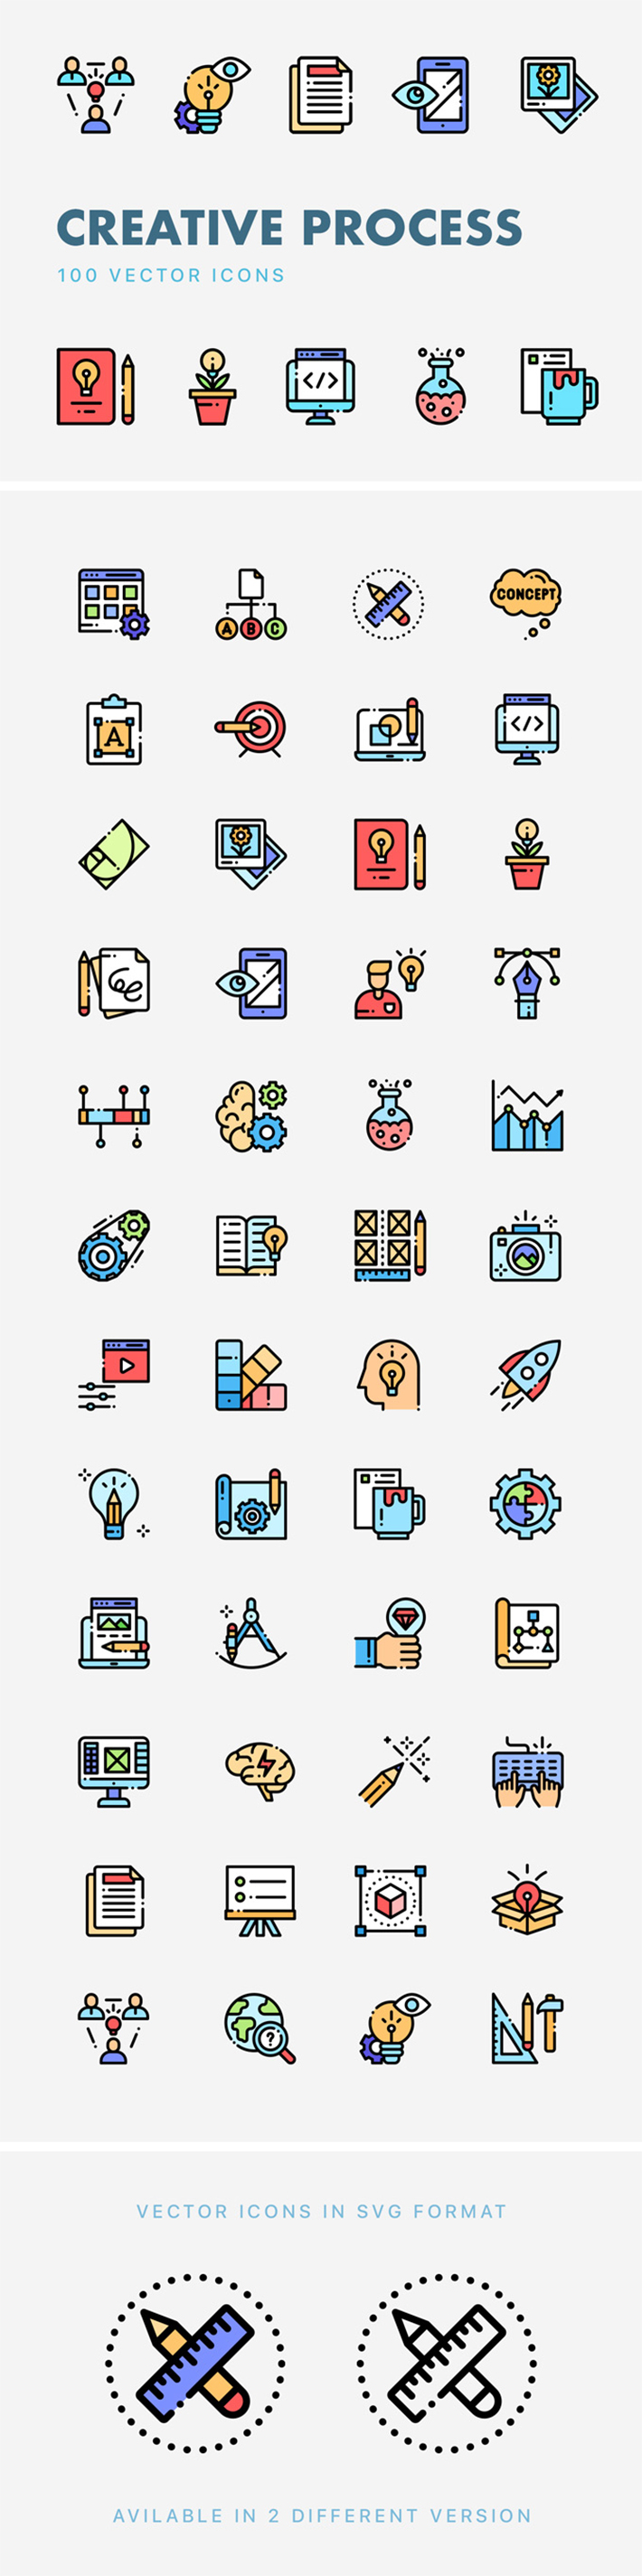 Elegant Process Icons For Designers